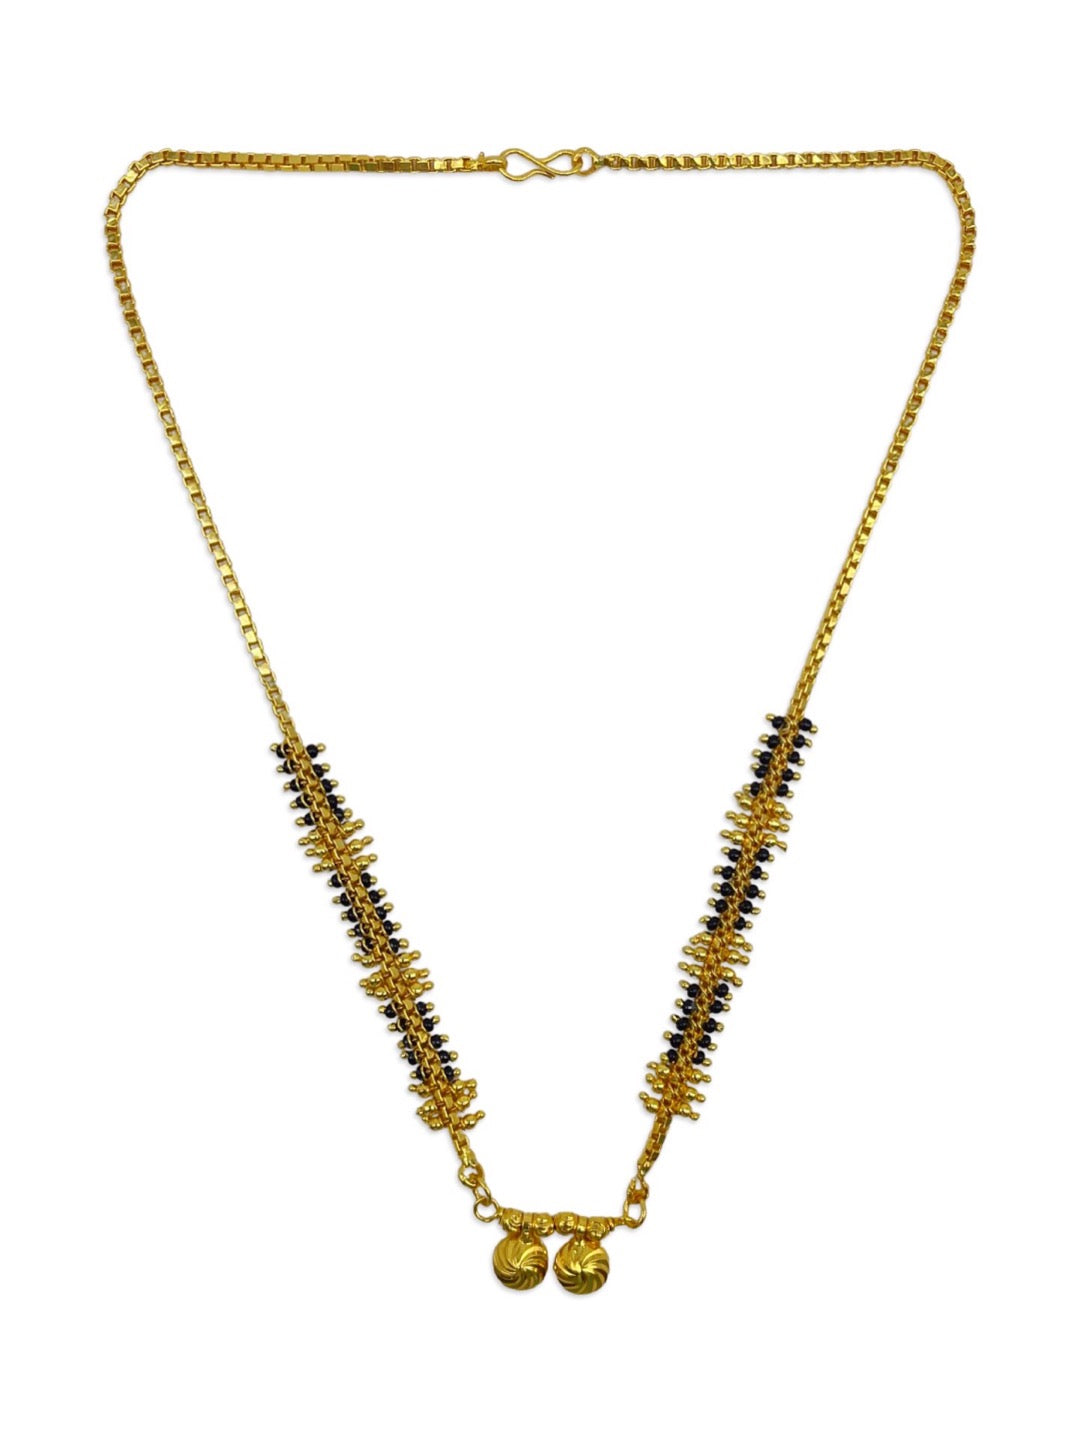 Short Mangalsutra Designs Gold Plated Latest 2 Vati Pendant Black & Gold Beads Traditional Mangalsutra